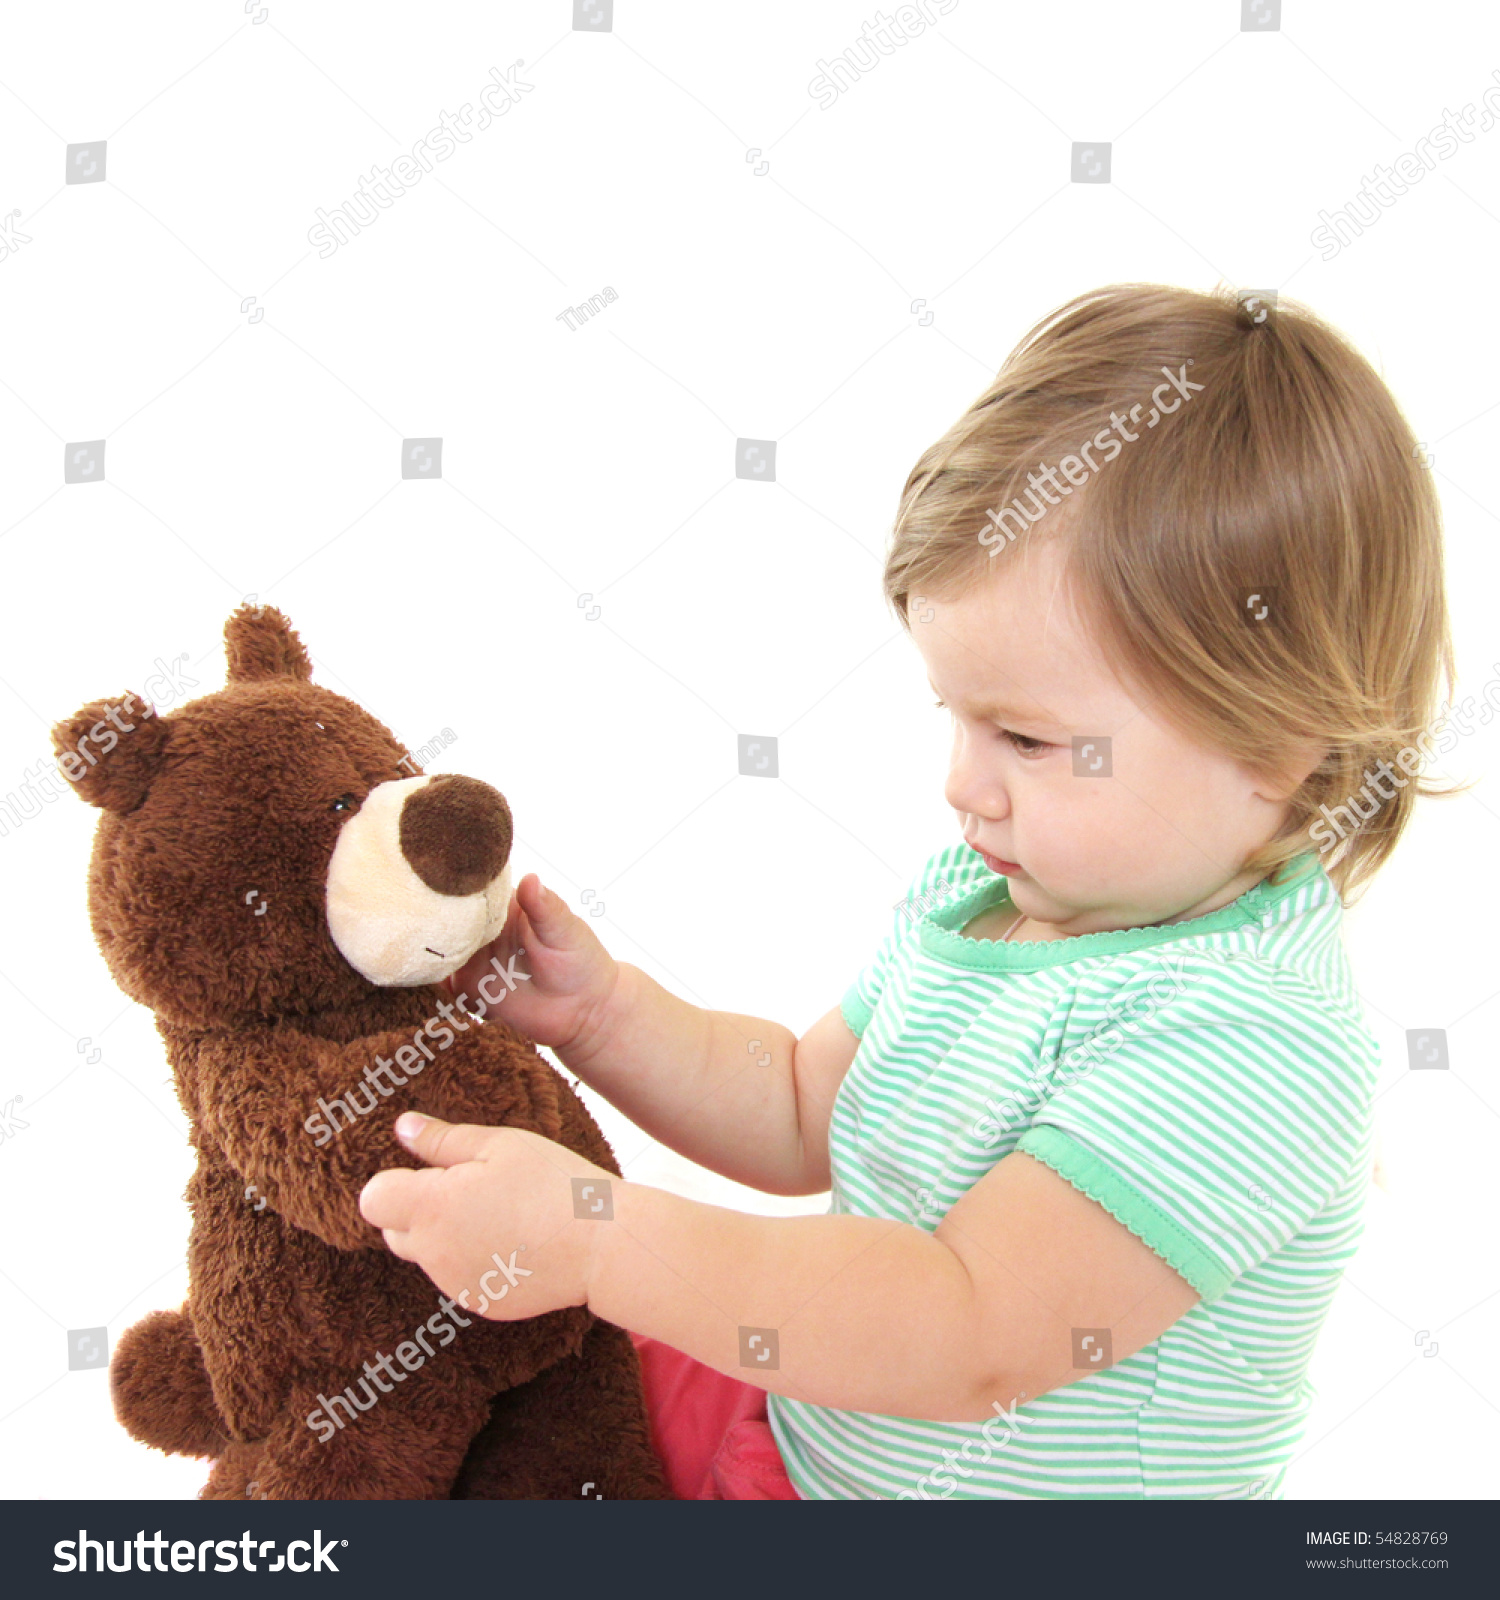 cute baby pics with teddy bear